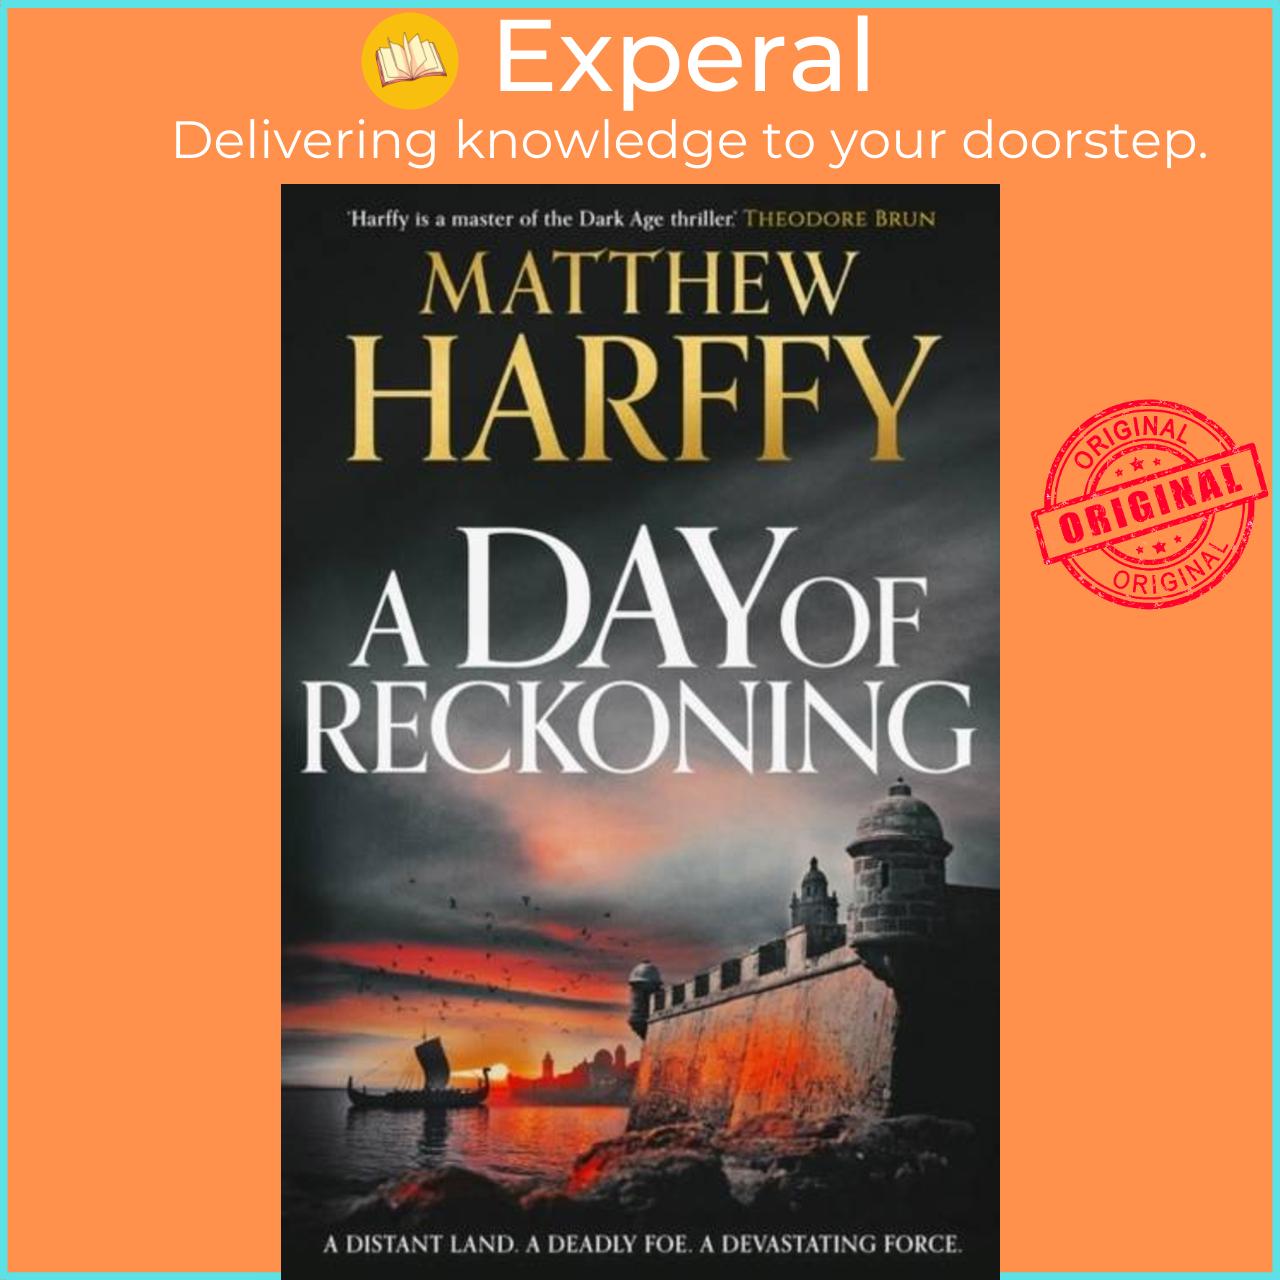 Hình ảnh Sách - A Day of Reckoning by Matthew Harffy (UK edition, hardcover)